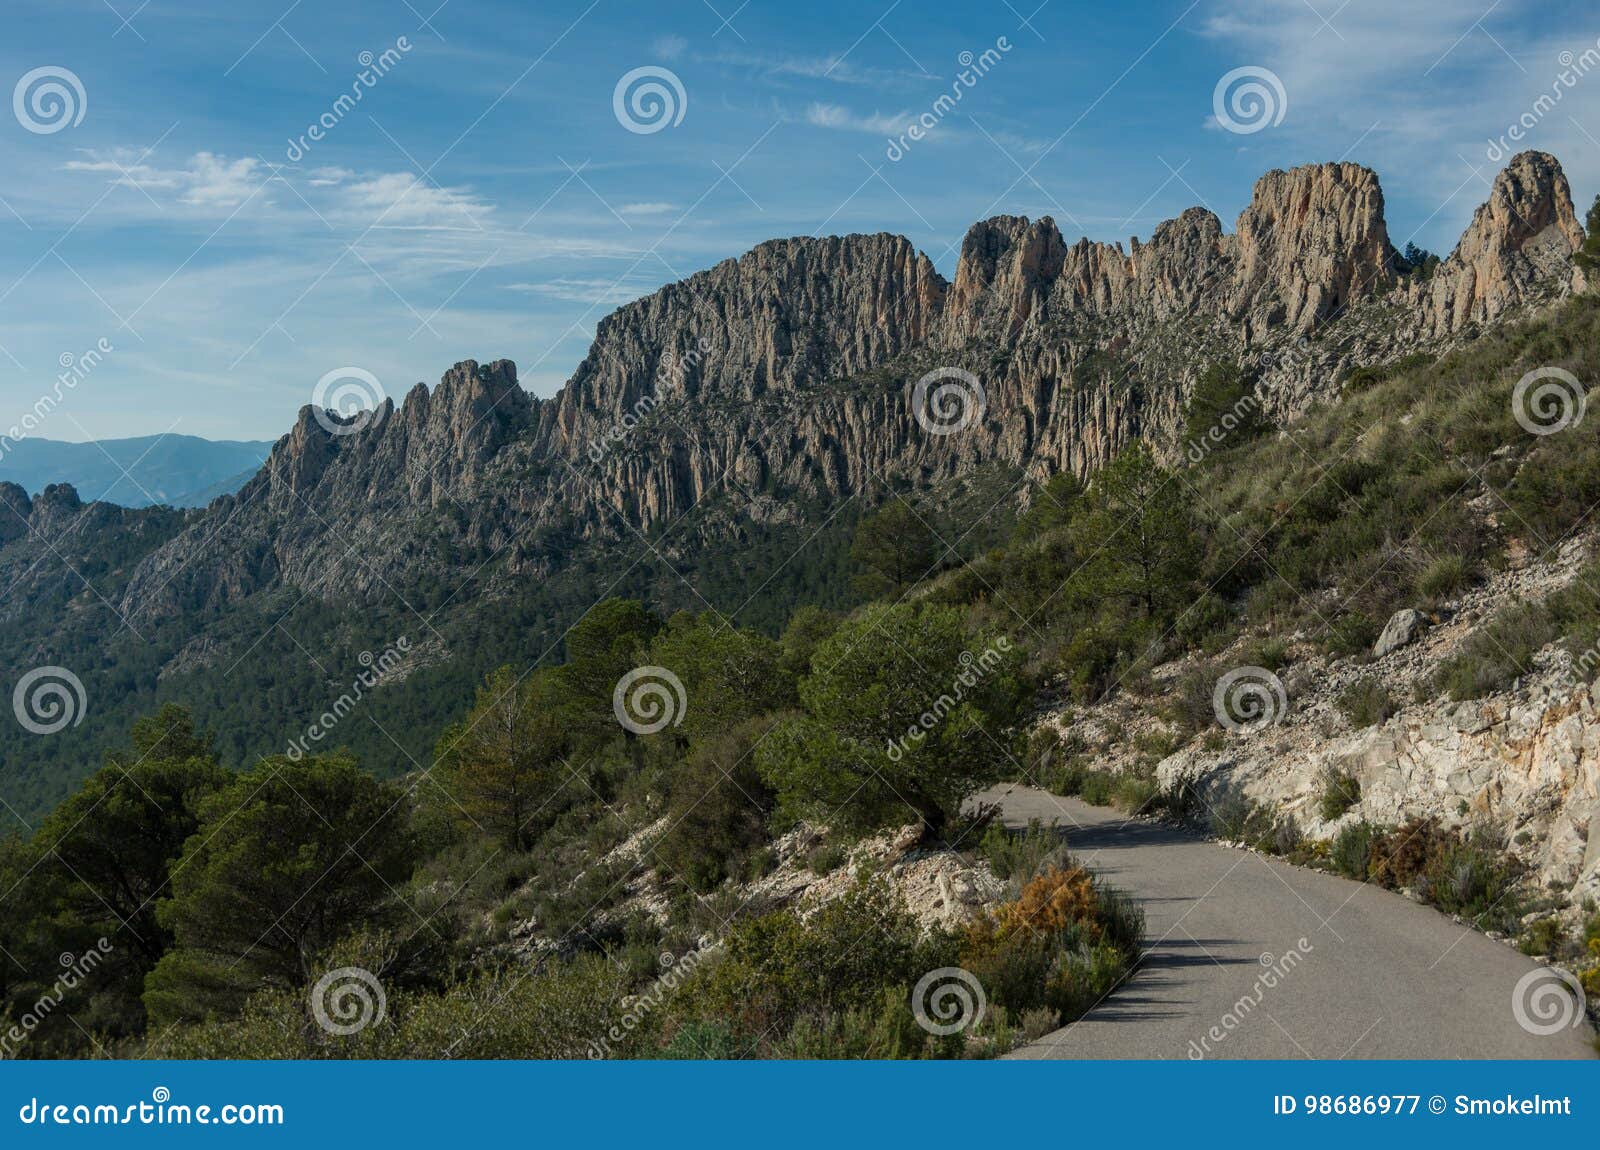 road across castellets ridge near puig campana, from near altea